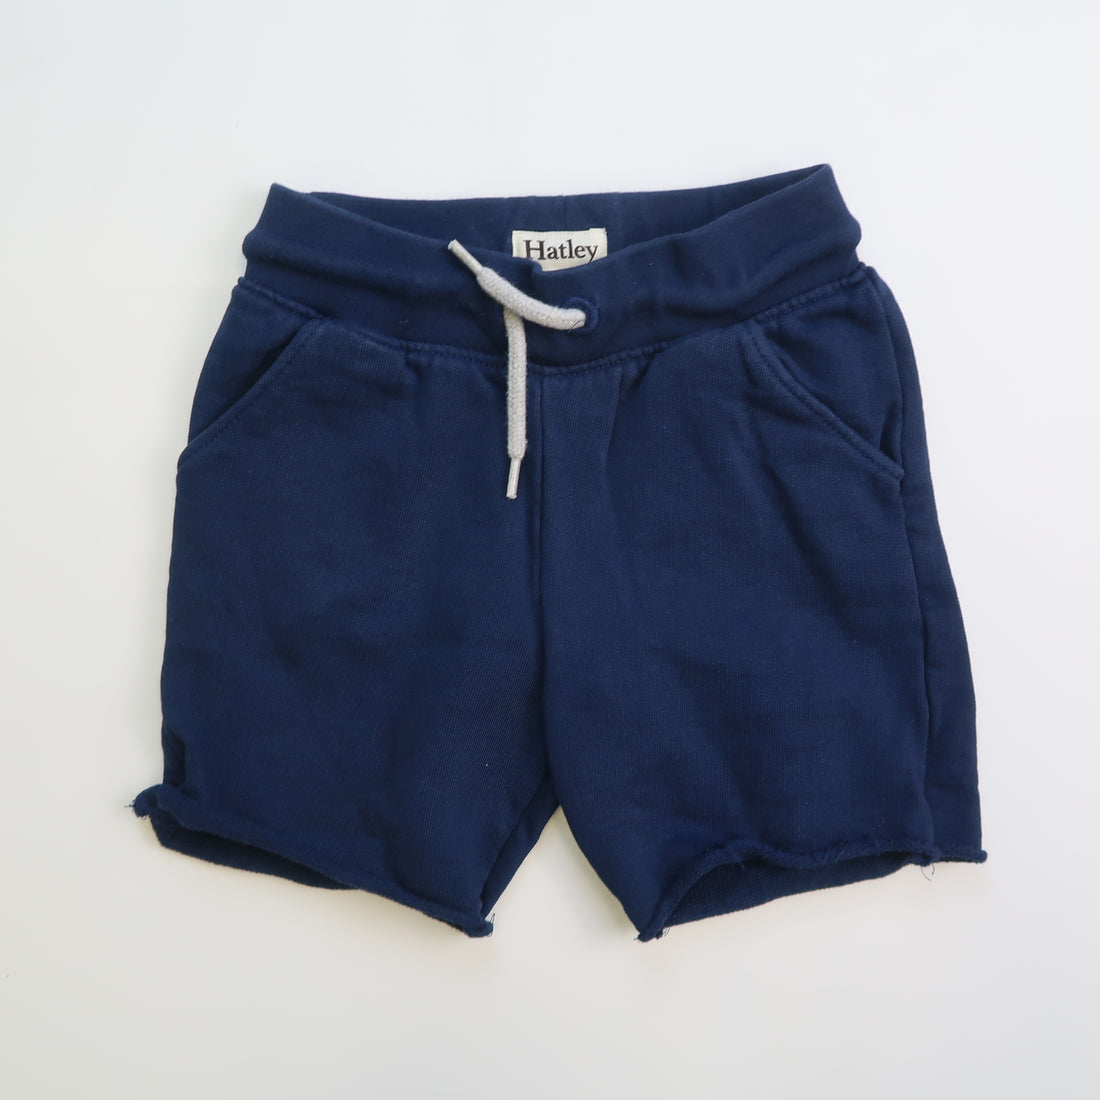 Hatley - Shorts (3T)